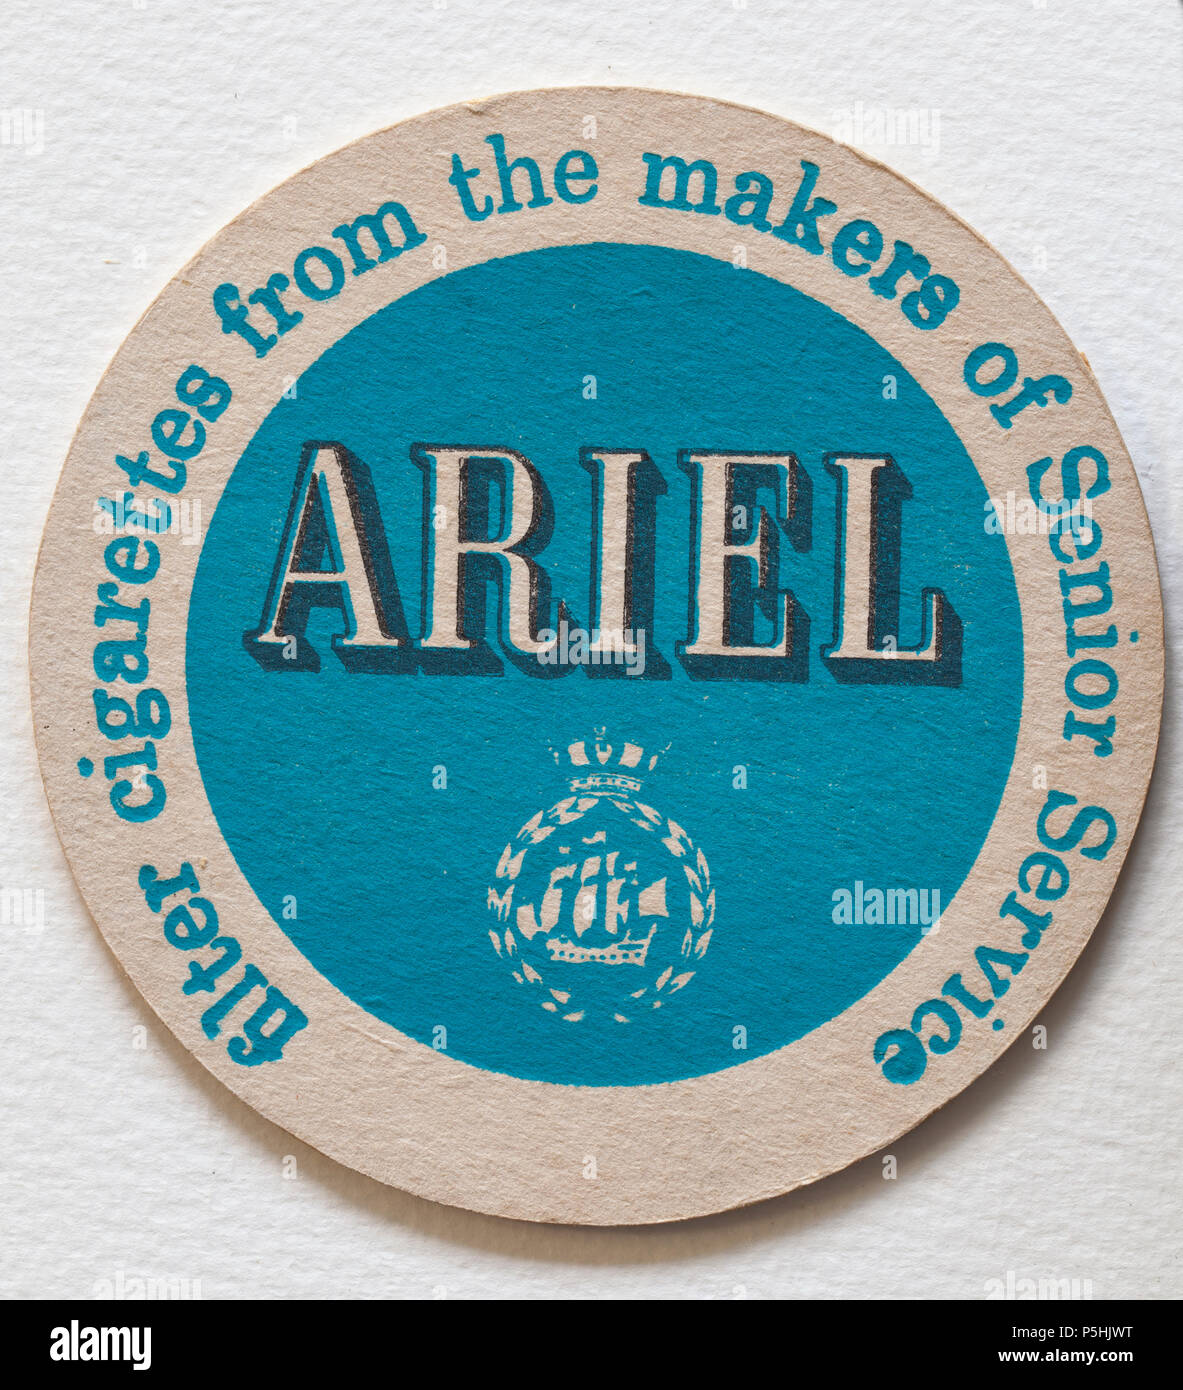 Vintage Pub Beer Mat Advertising Ariel Cigarettes Stock Photo